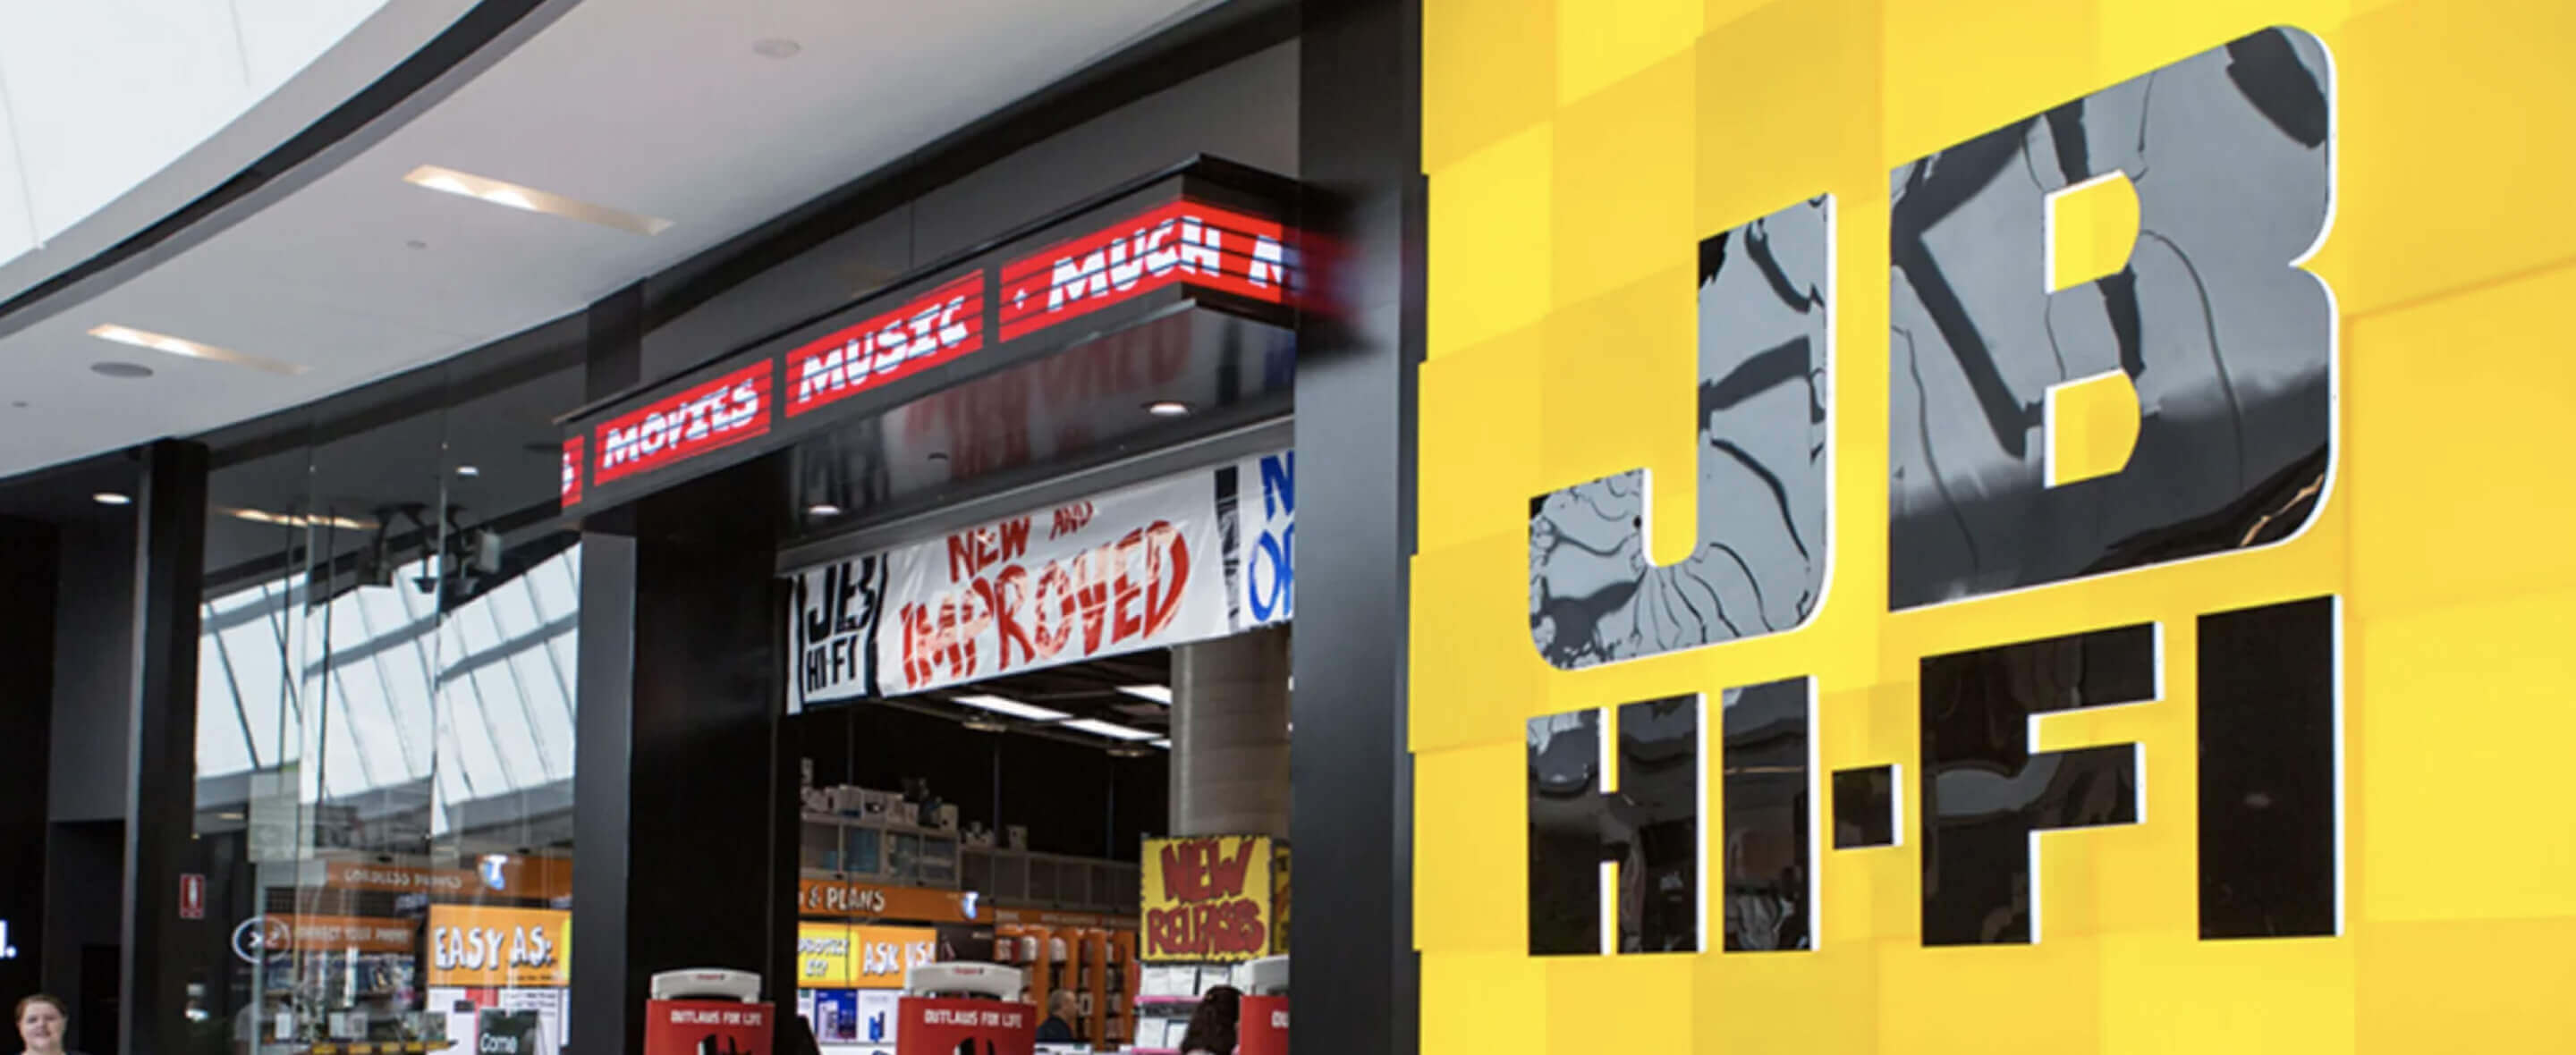 JB Hi-Fi store front.